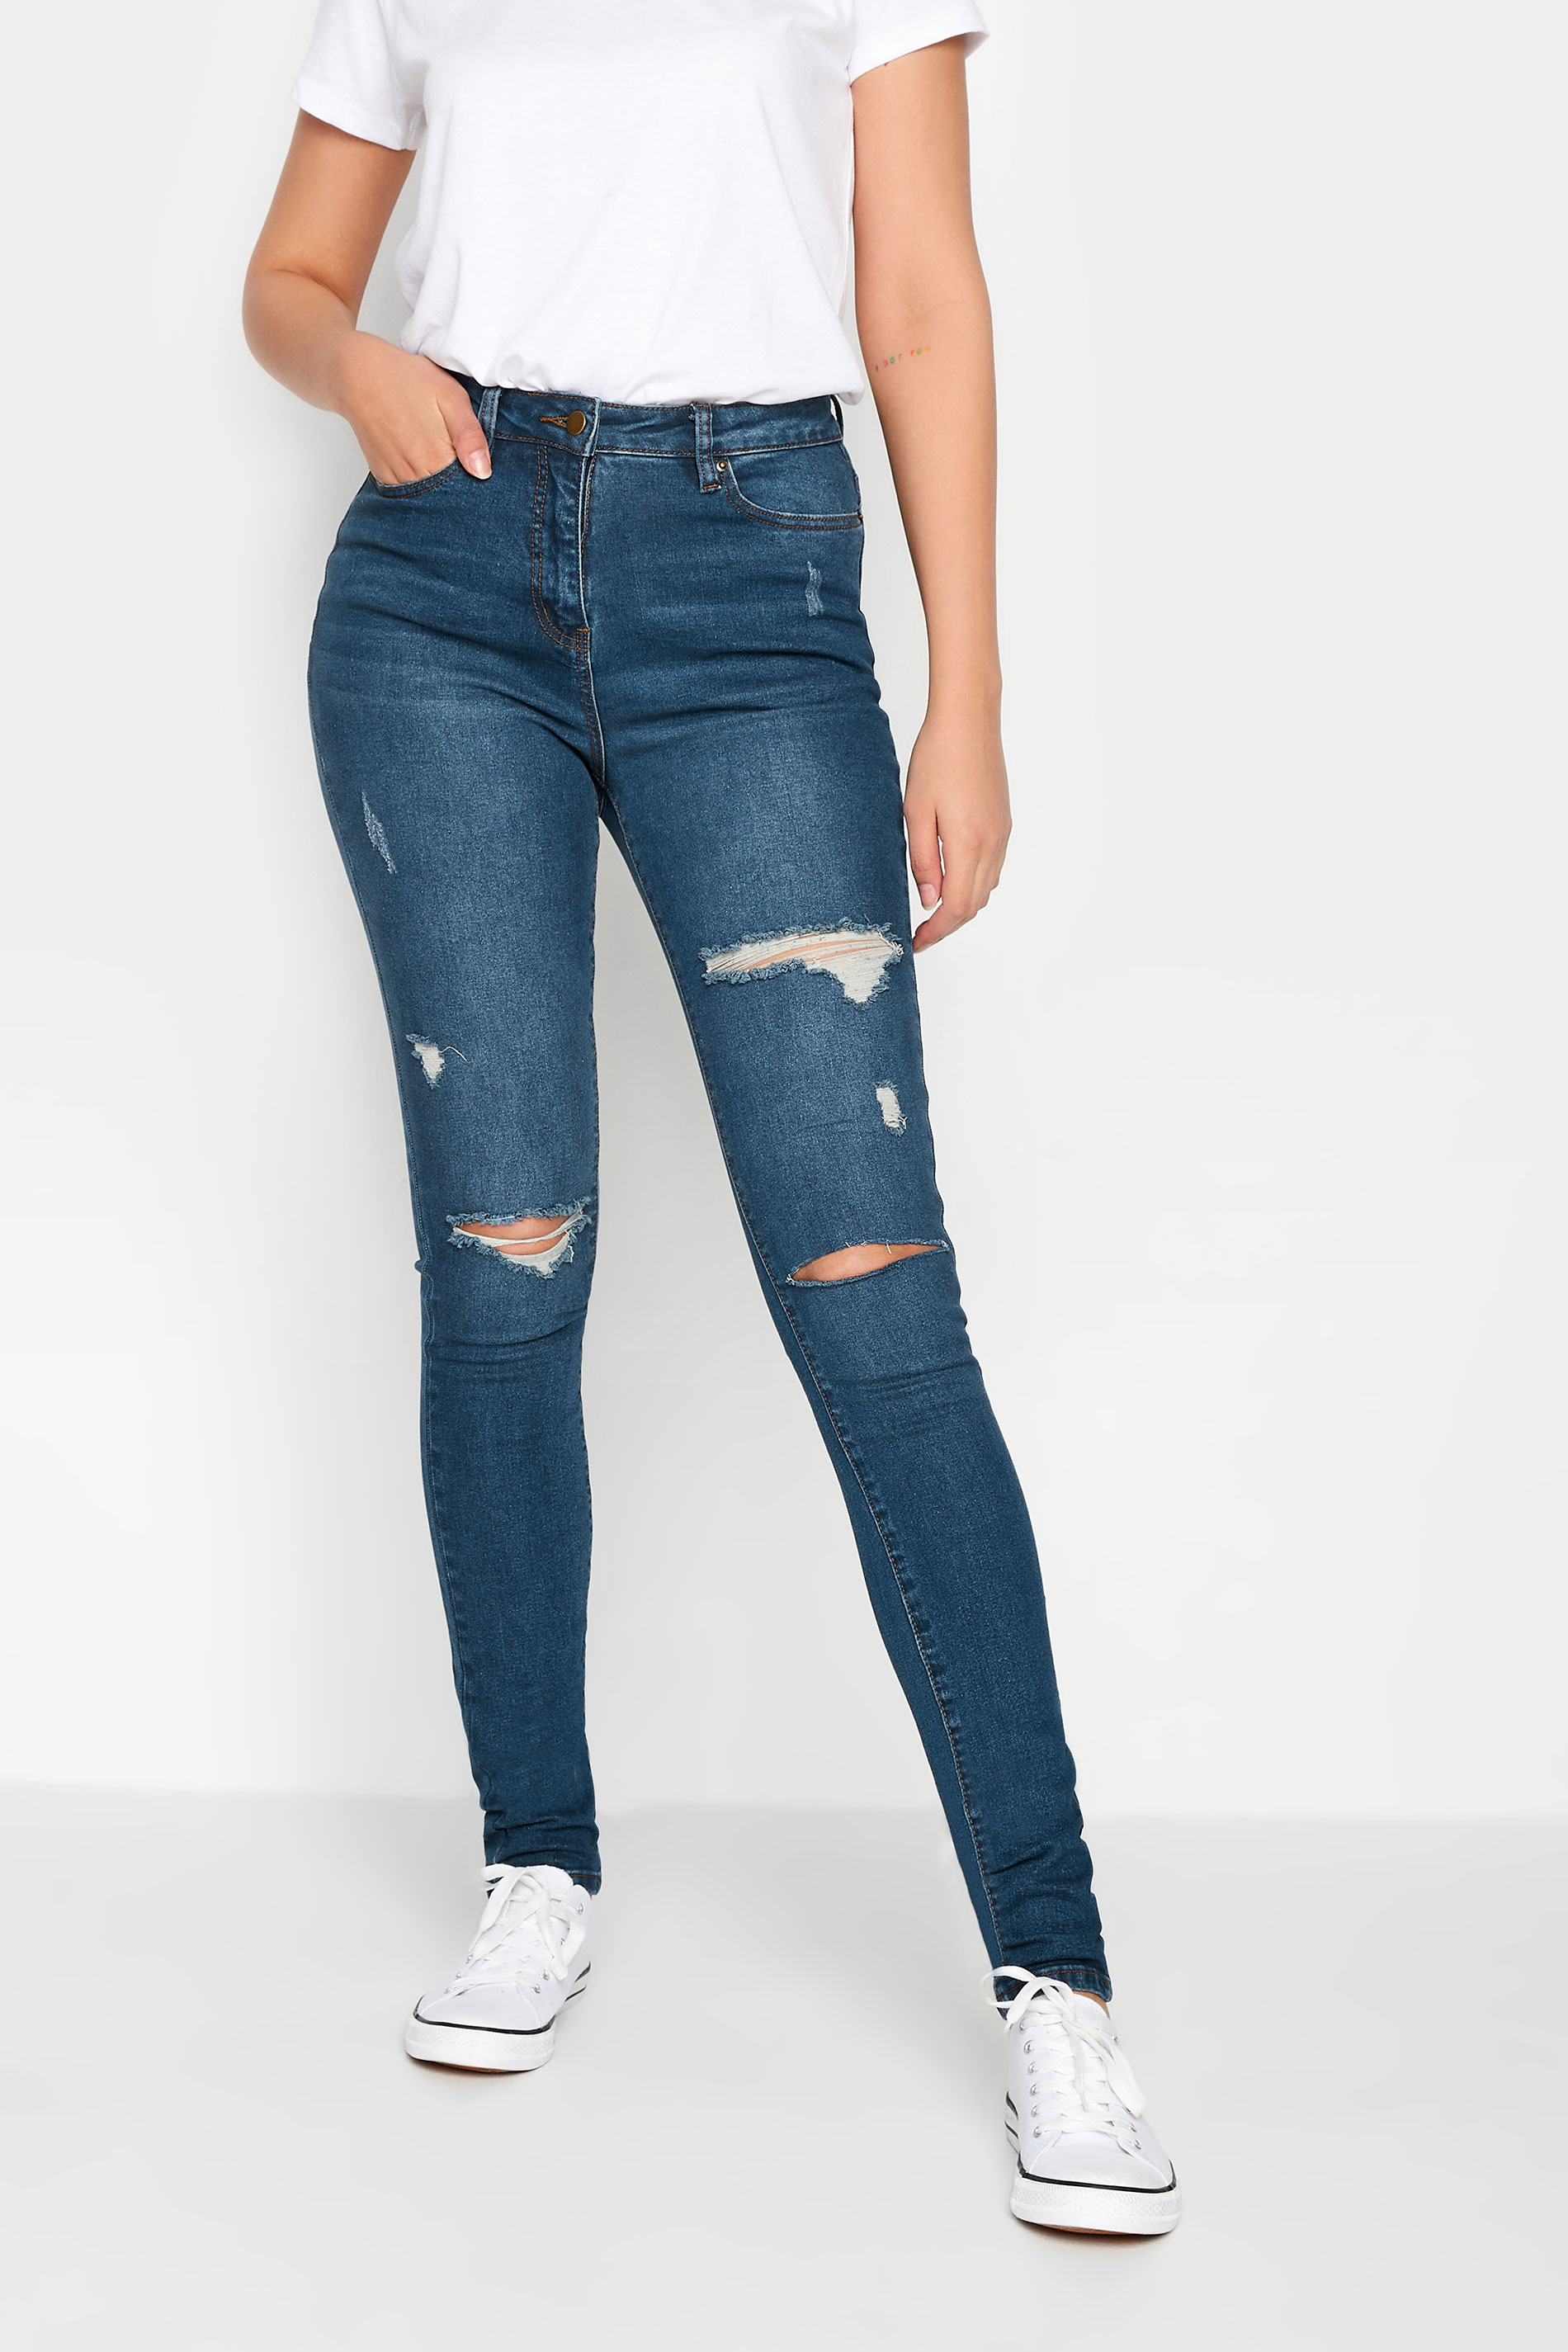 LTS Tall Women's Mid Blue Distressed AVA Skinny Jeans | Long Tall Sally 1